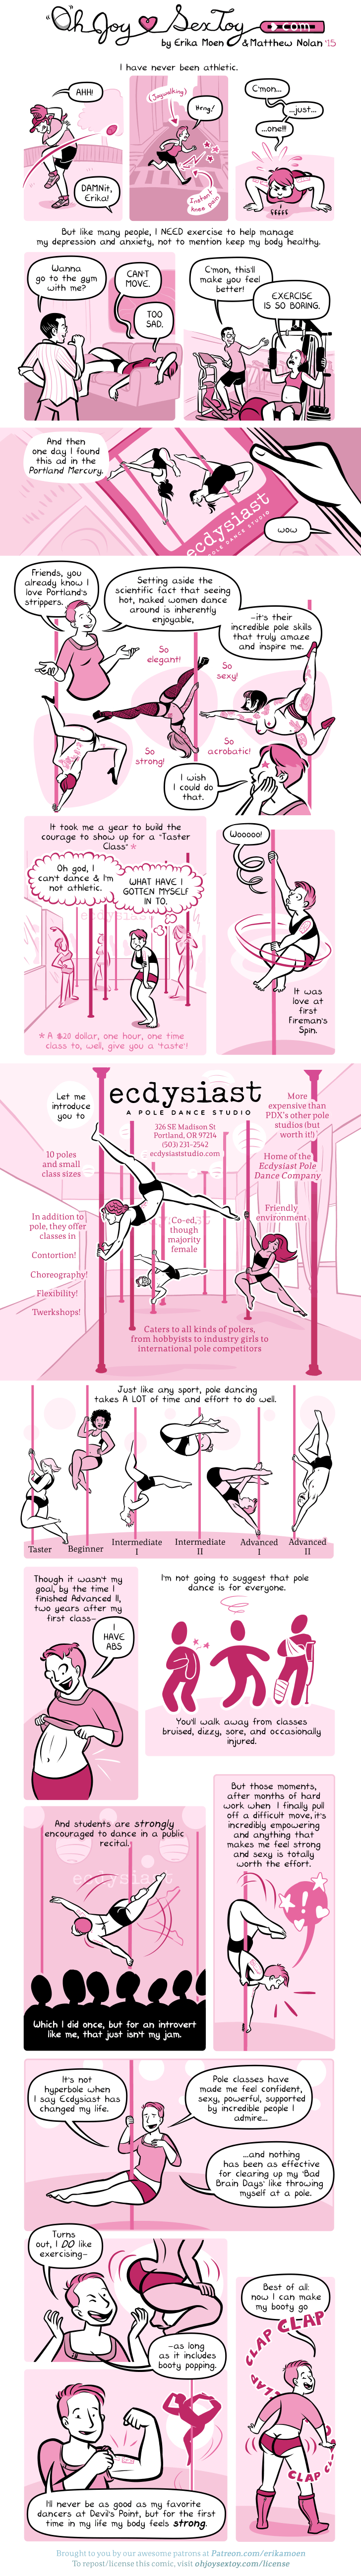 Ecdysiast: A Pole Dance Studio